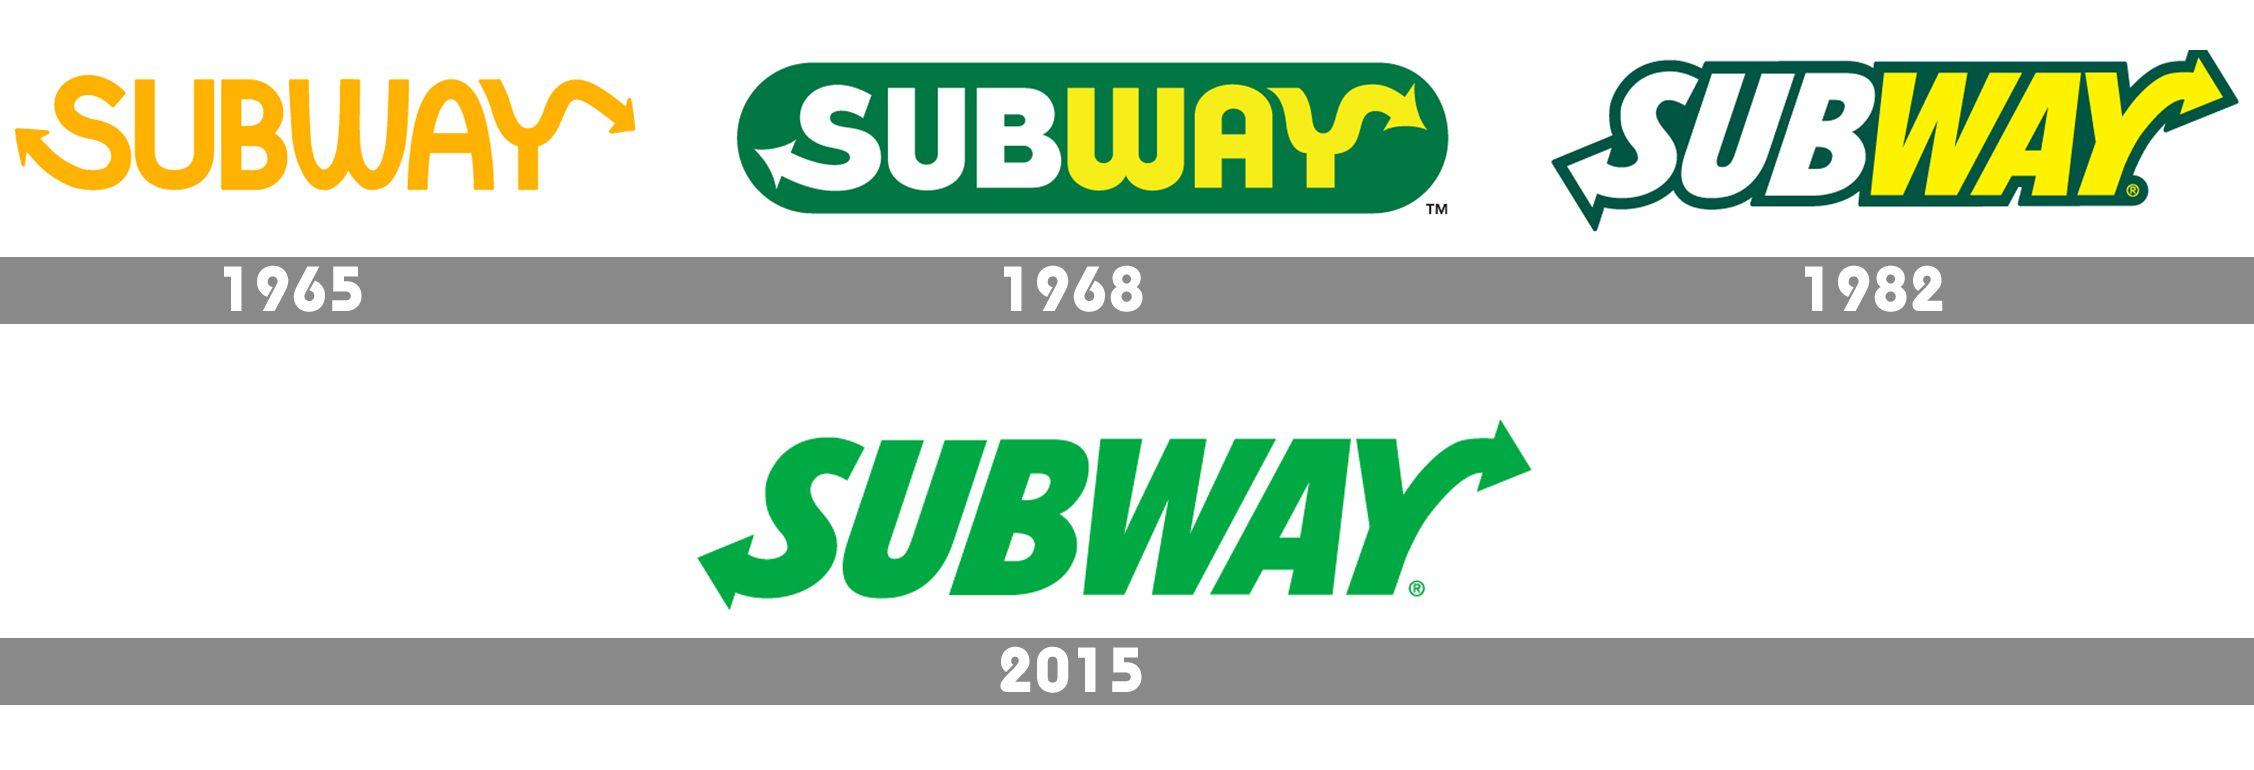 Subway Logo - Subway Logo, Subway Symbol, Meaning, History and Evolution